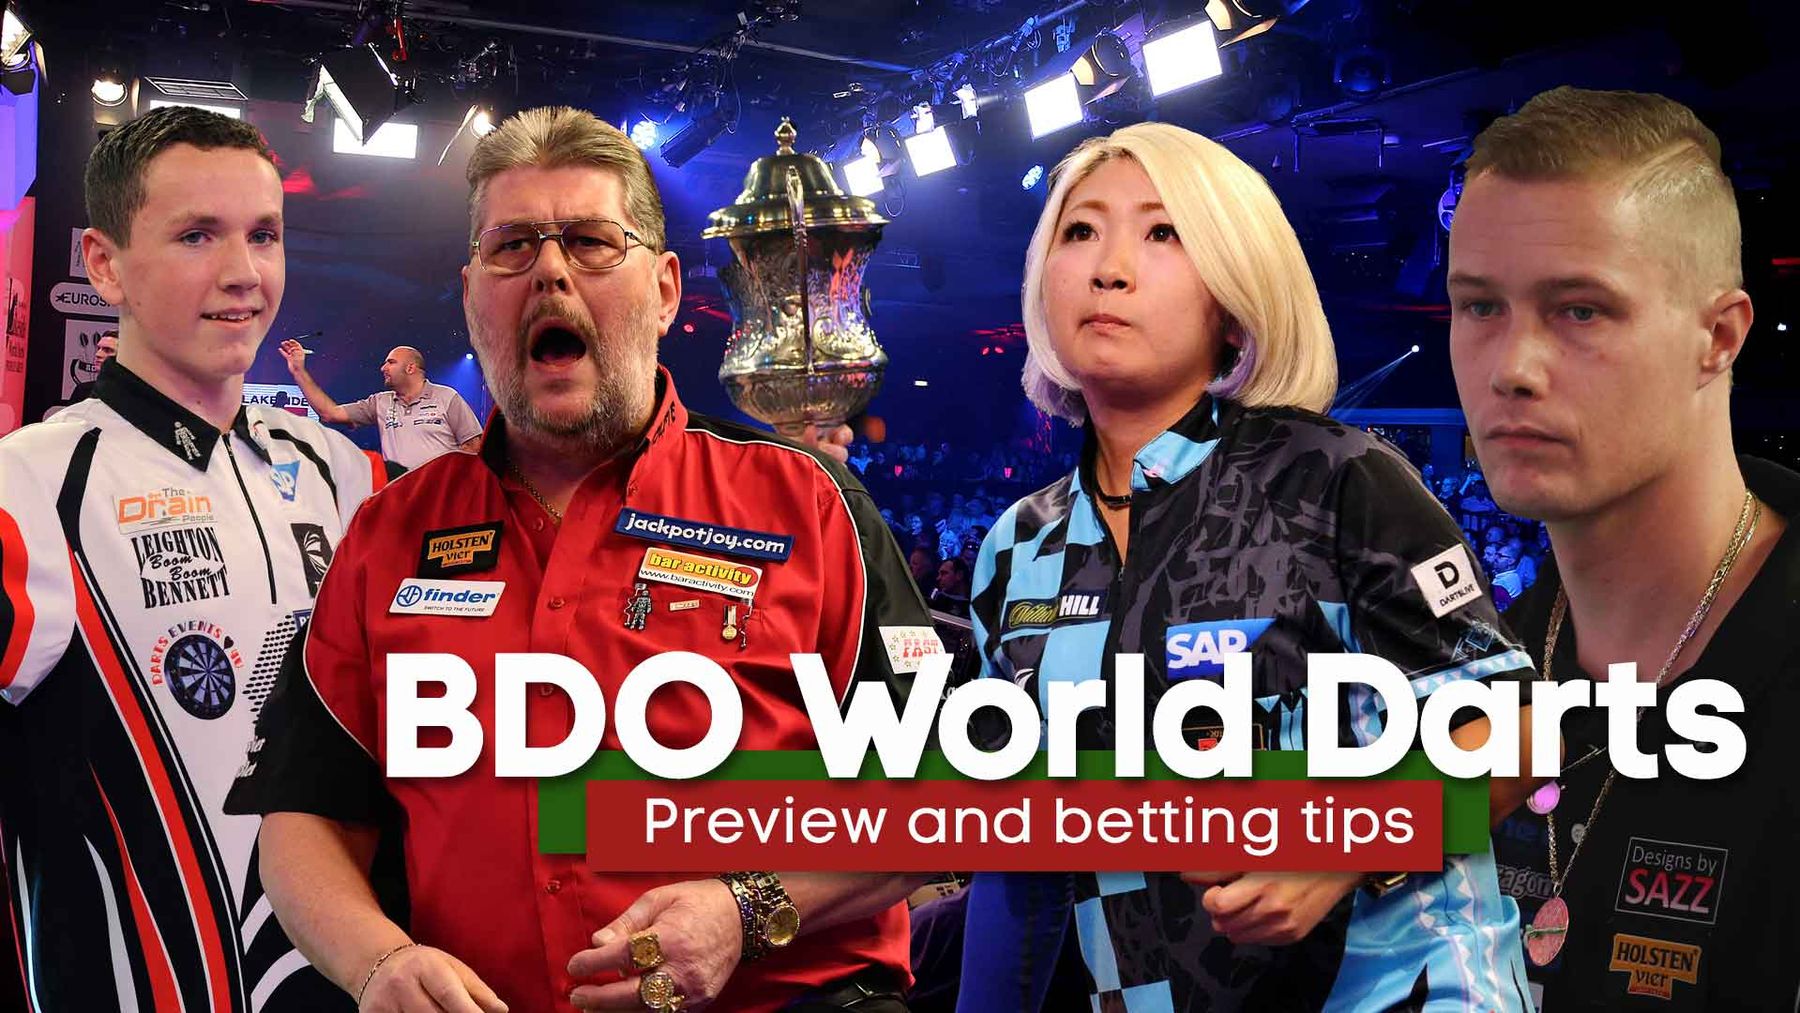 BDO World Darts Championships Free darts betting tips, preview and